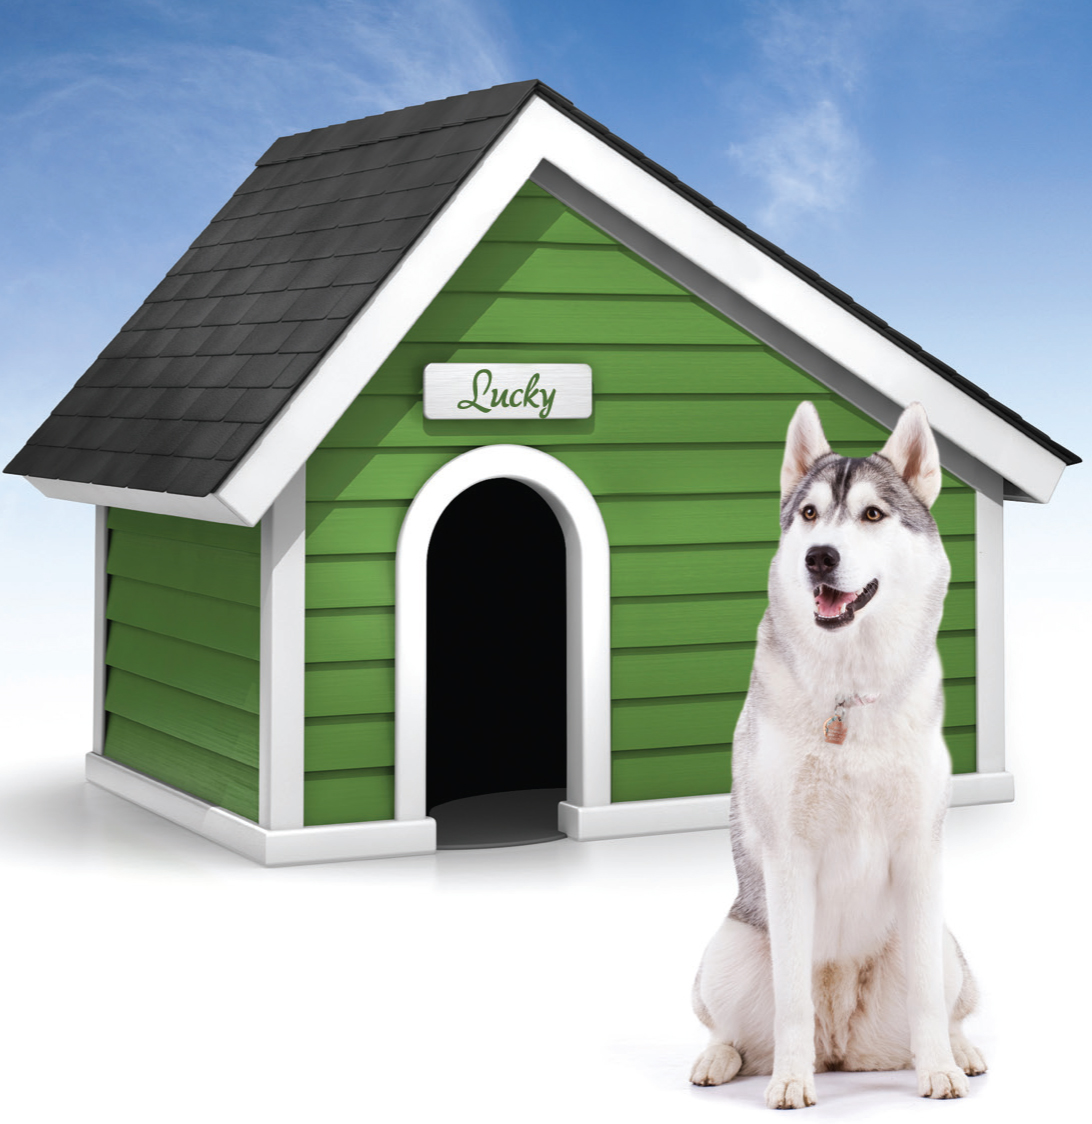 Зе дог хаус демо dog houses info. Будка для собаки хаски. Дом для собаки. Красивые собачьи будки. Собака с конурой.